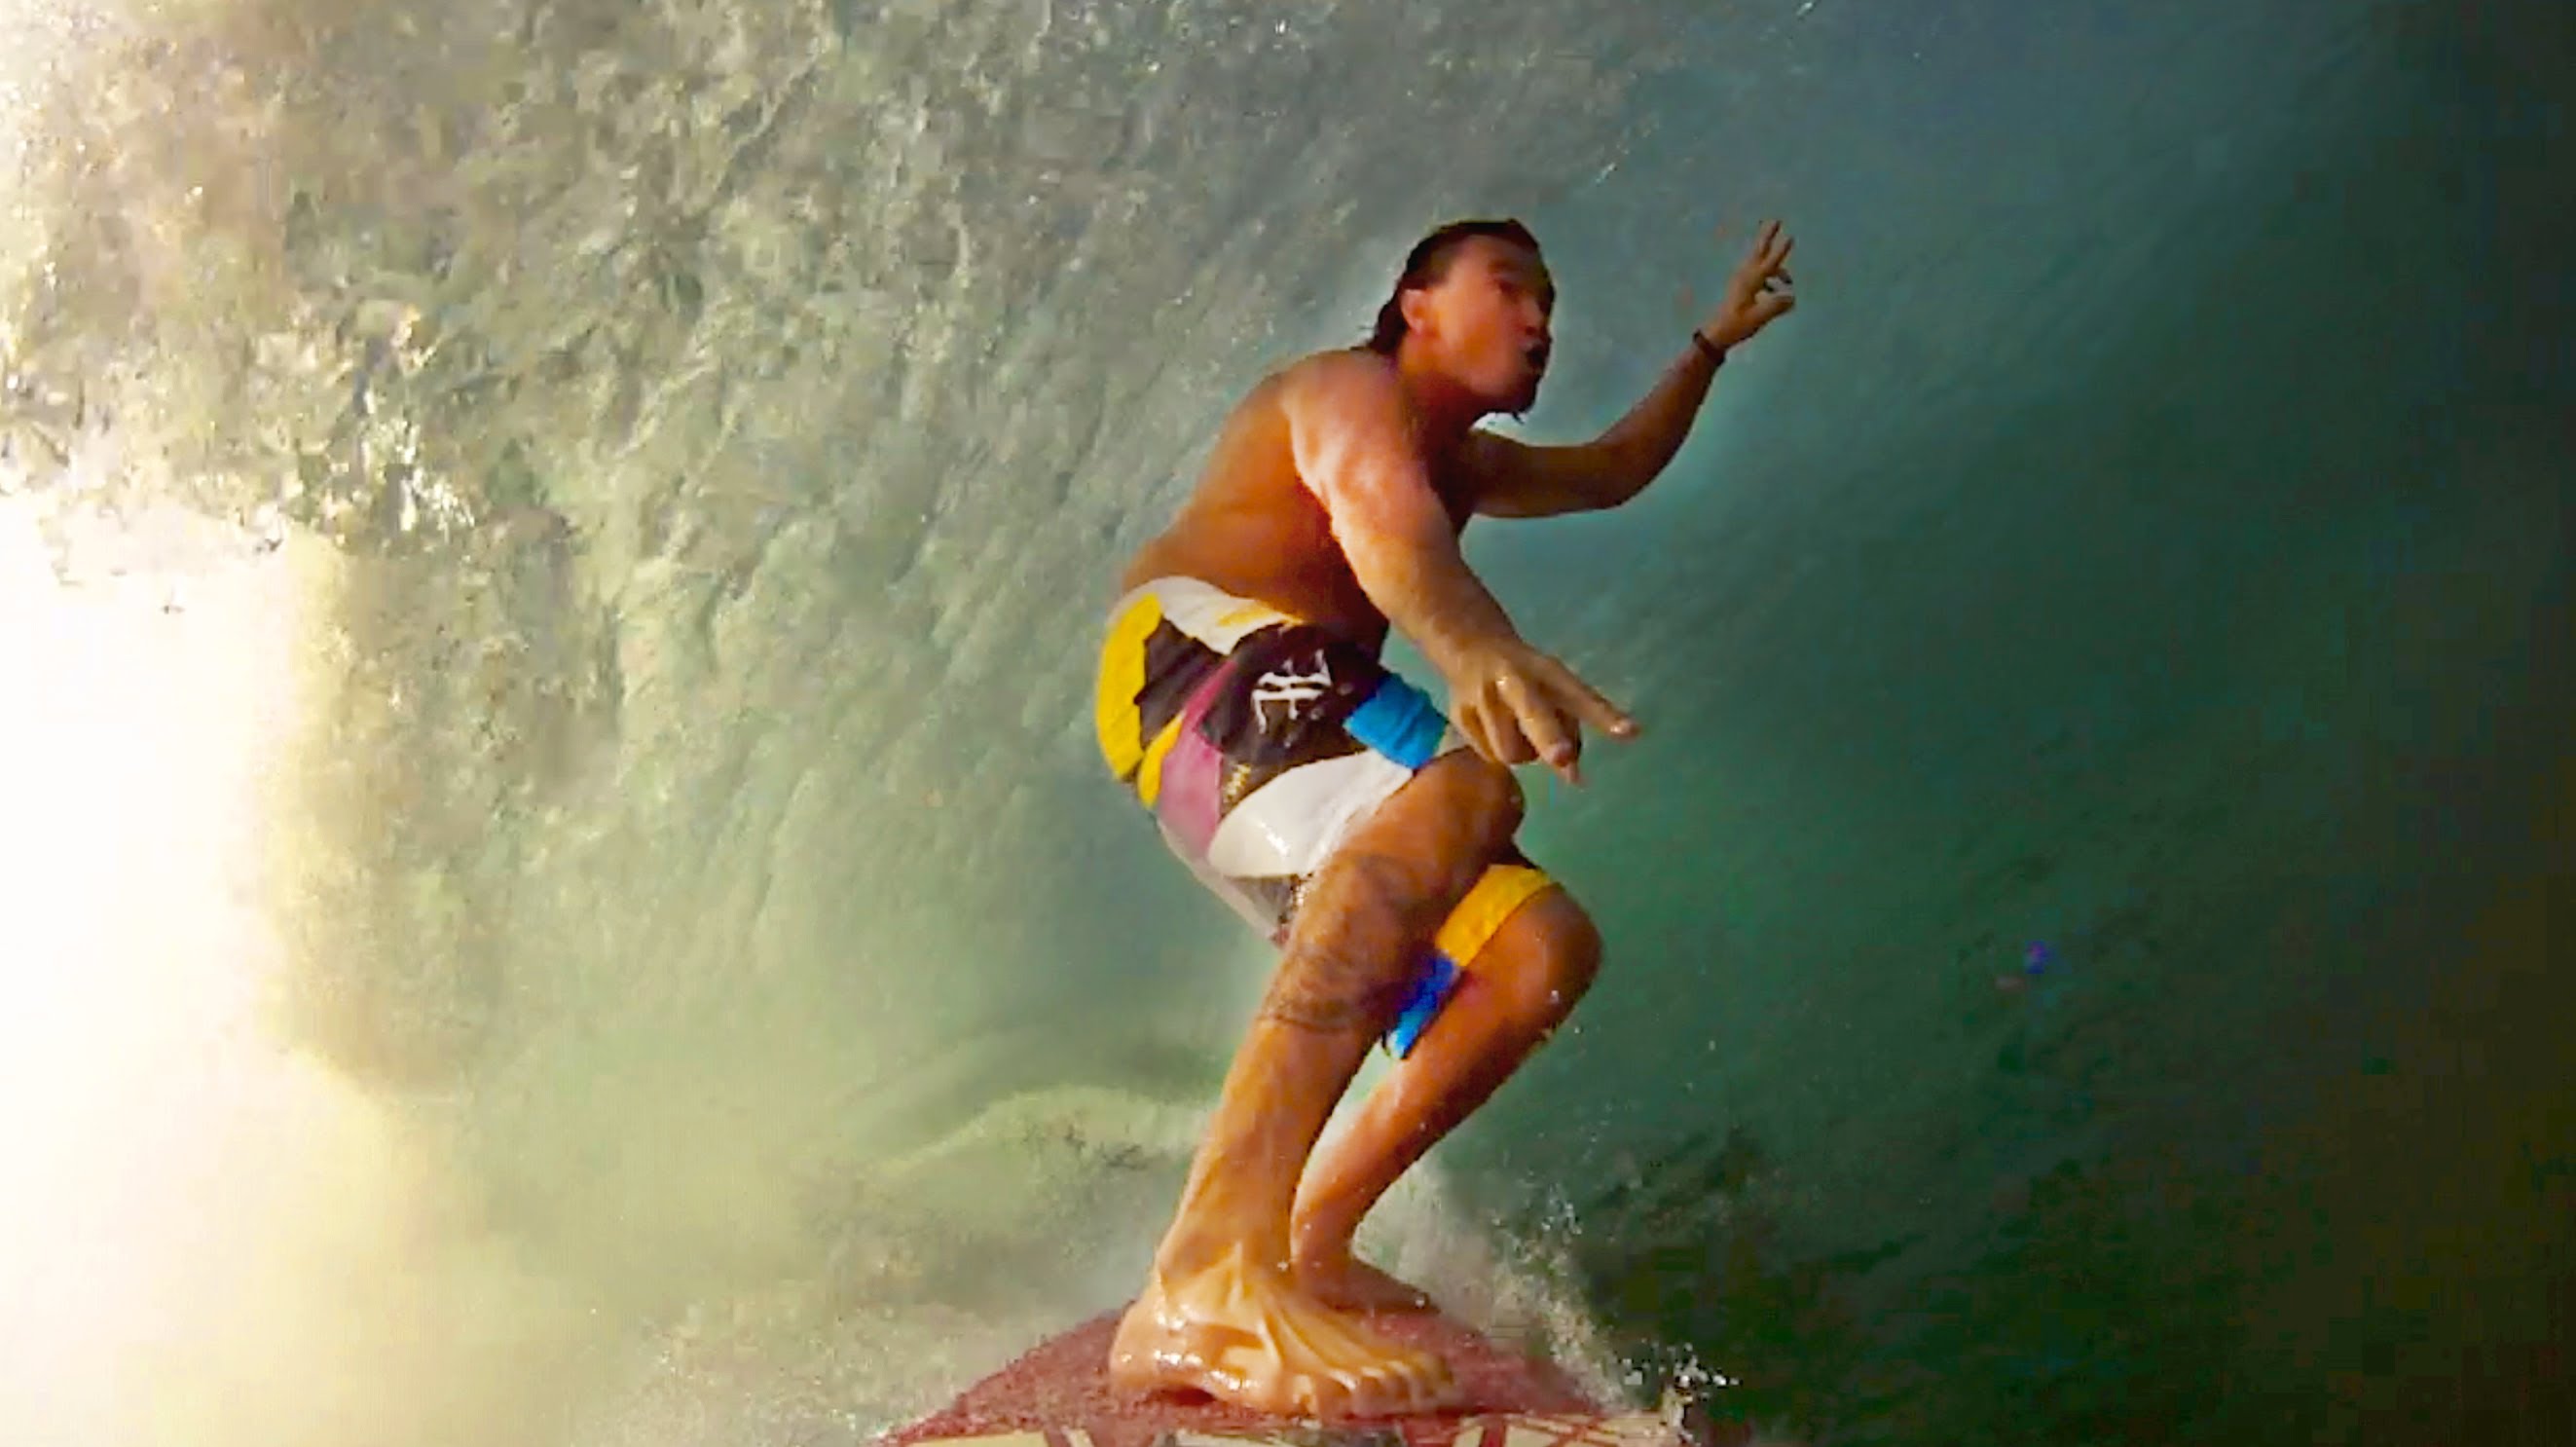 The Surf Movie